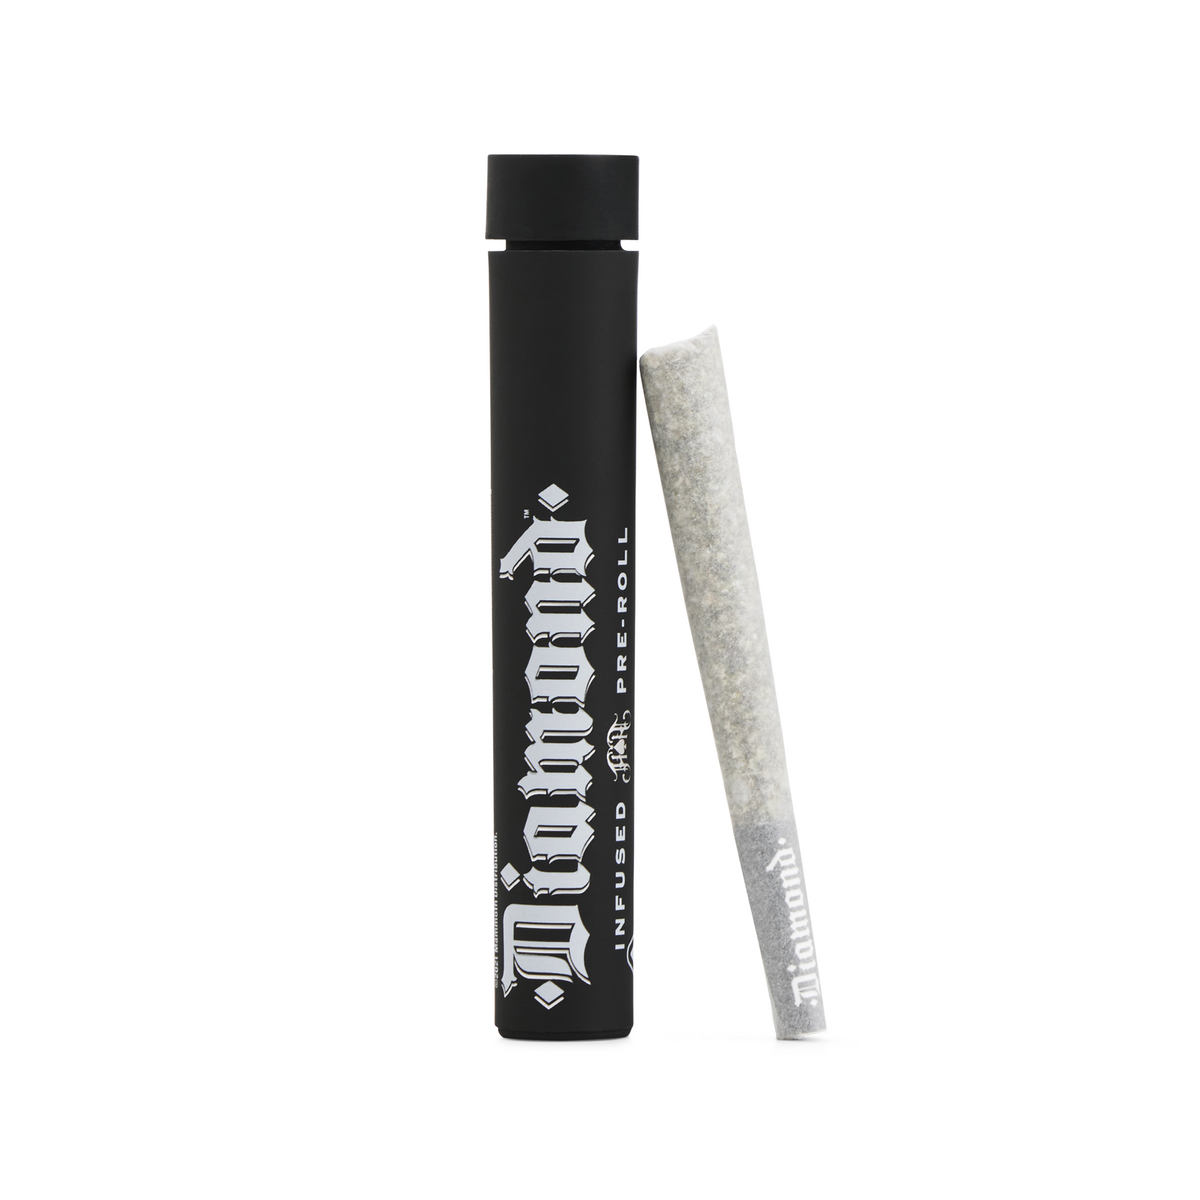 Spray Tan | Sativa - Diamond THCA-Infused Pre-Roll - 1G Joint